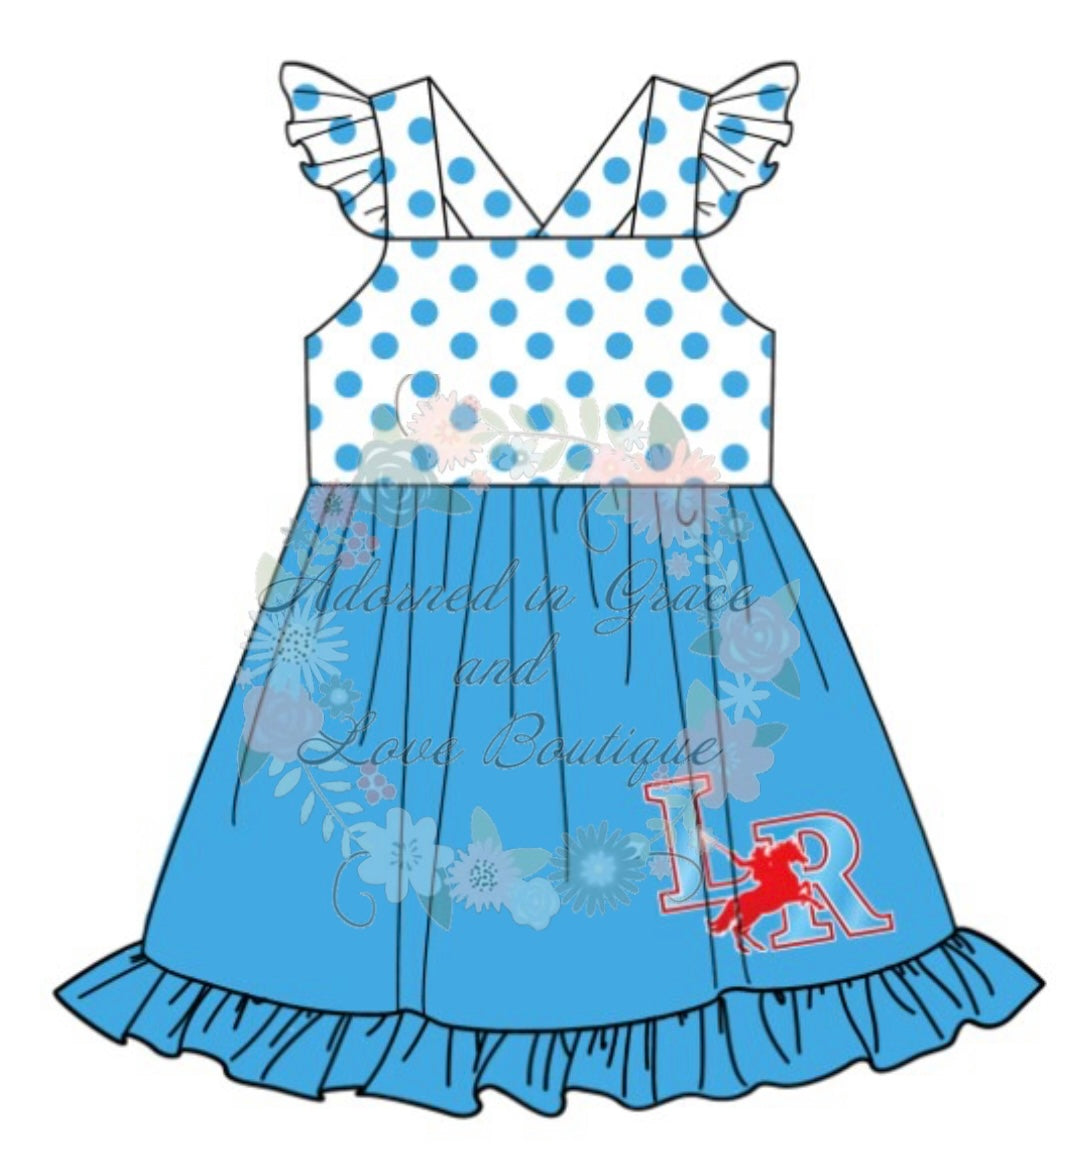 School Spirit Polka Dot dress Pt.1(CLOSED)